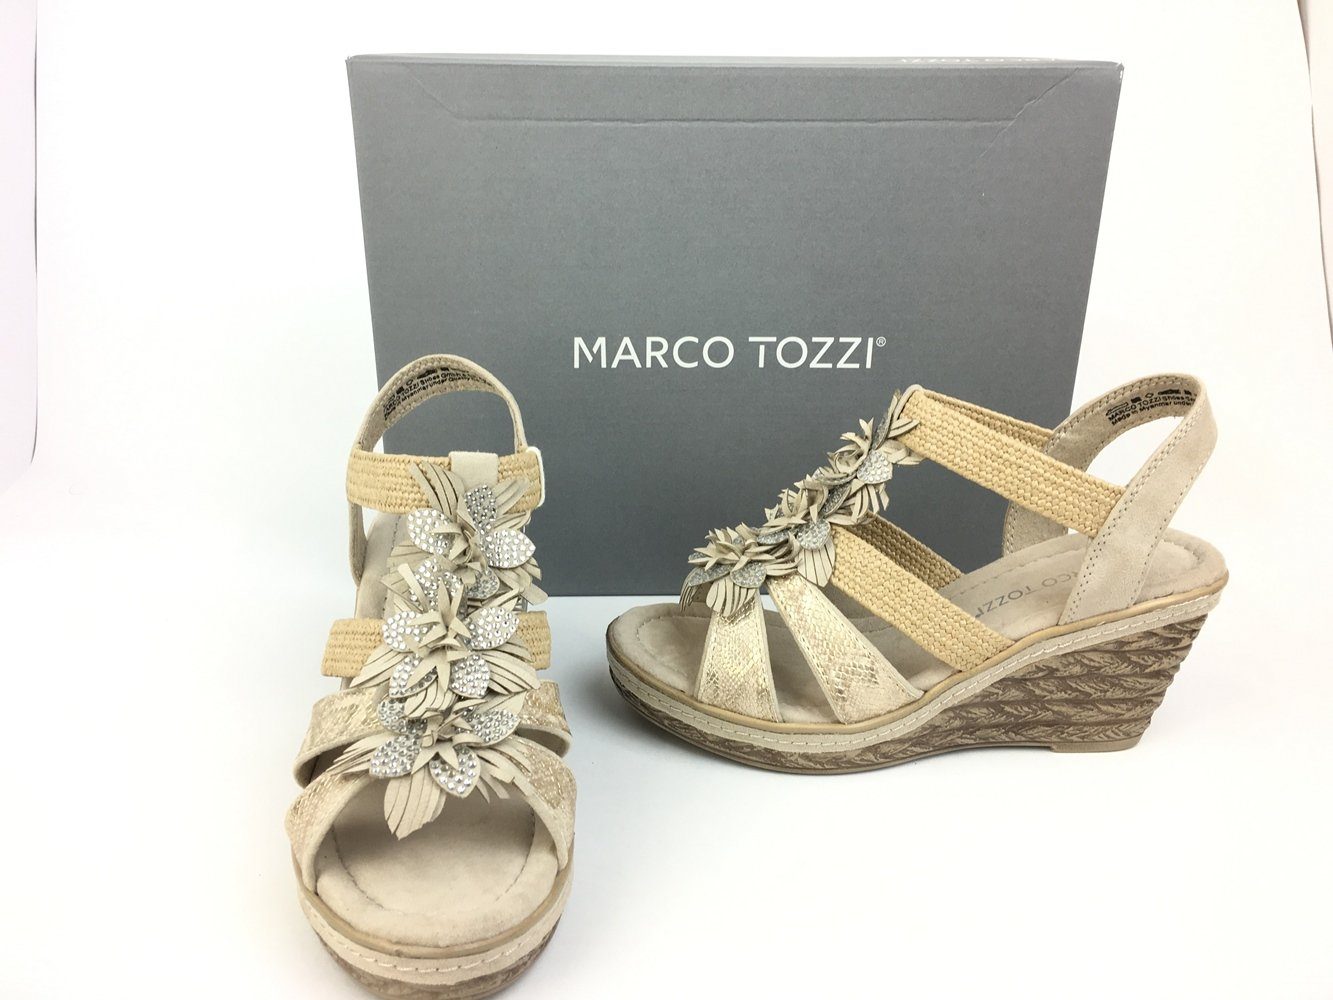 MARCO TOZZI Marco Tozzi Damen Keil-Sandale beige mit Glitzerblümchen am Steg Keilsandalette